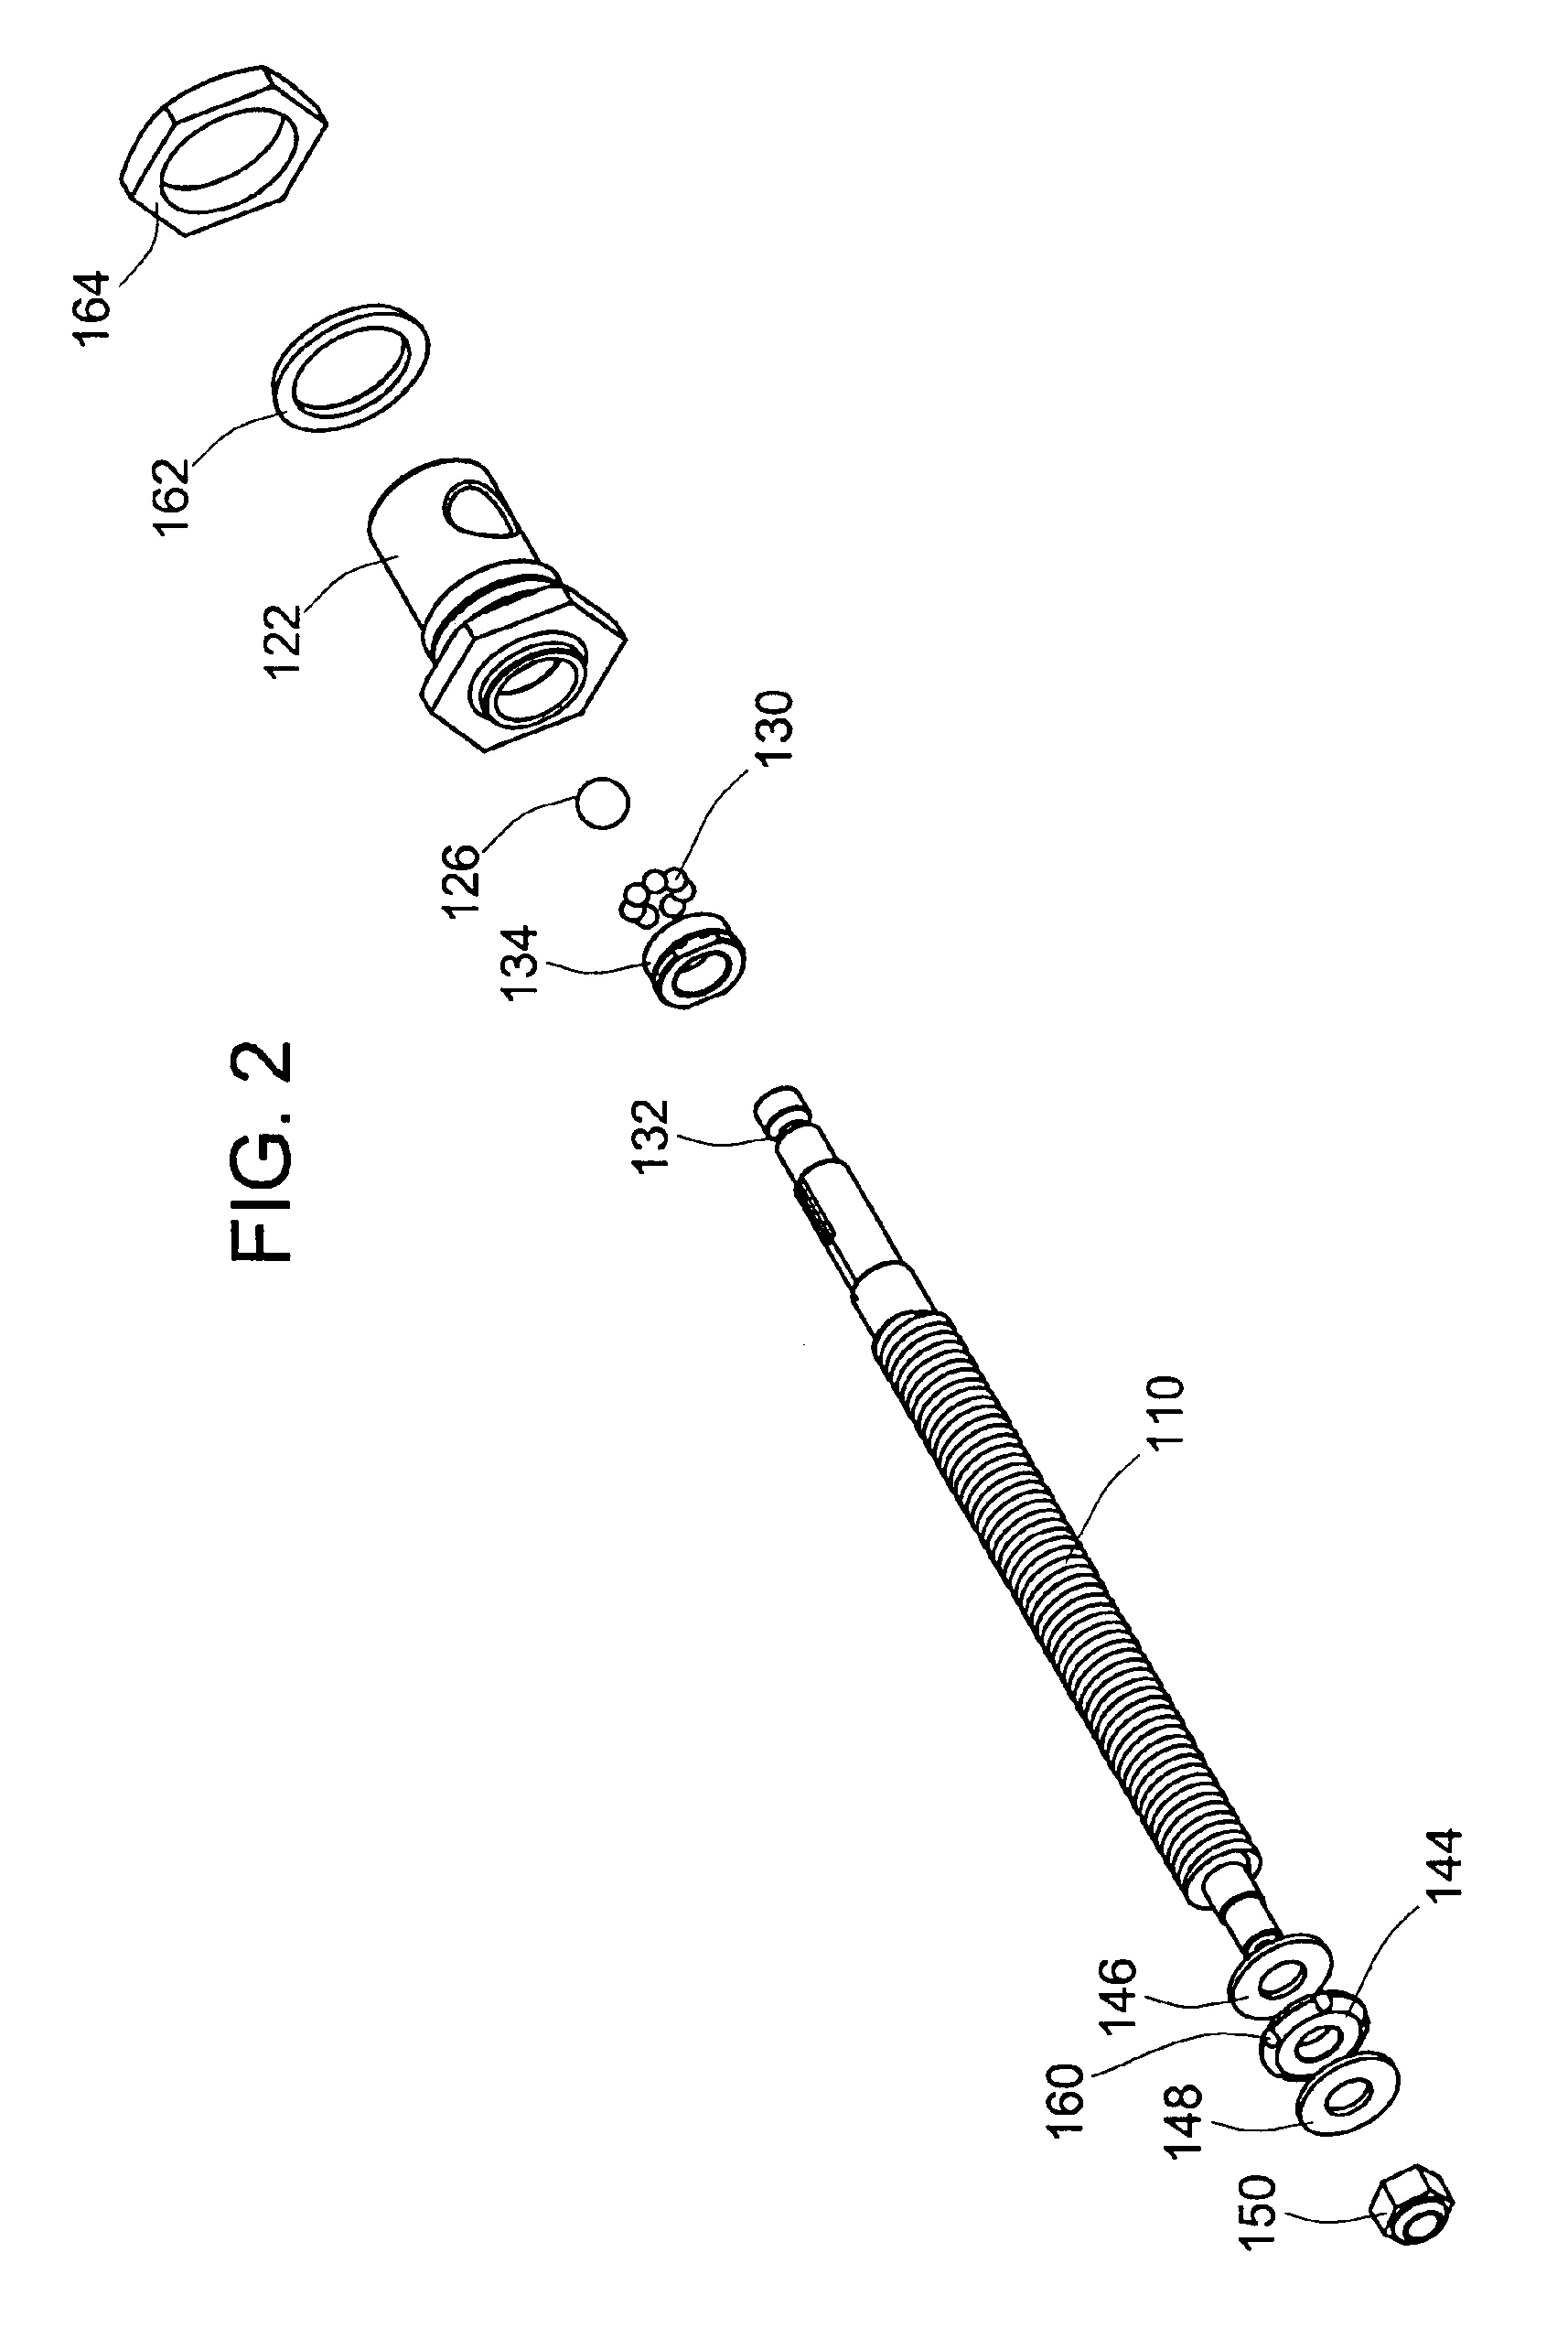 Electromechanical screw drive actuator